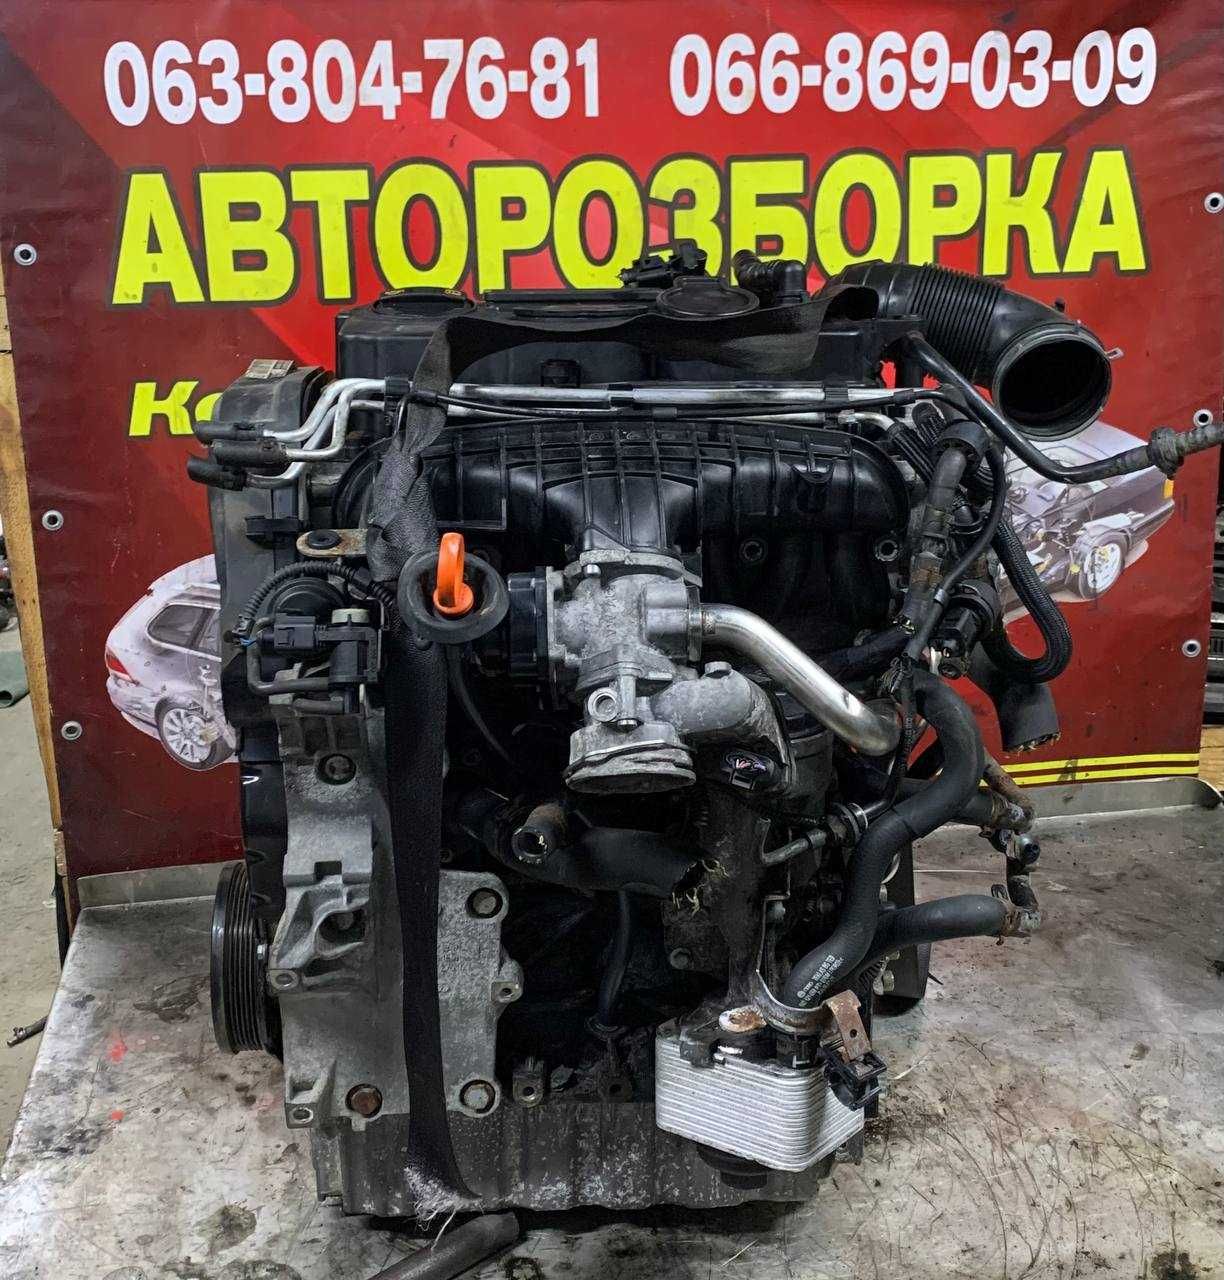 Двигун Мотор Двігатель Volkswagen Passat B6, Golf 5 2.0 tdi 125 kw